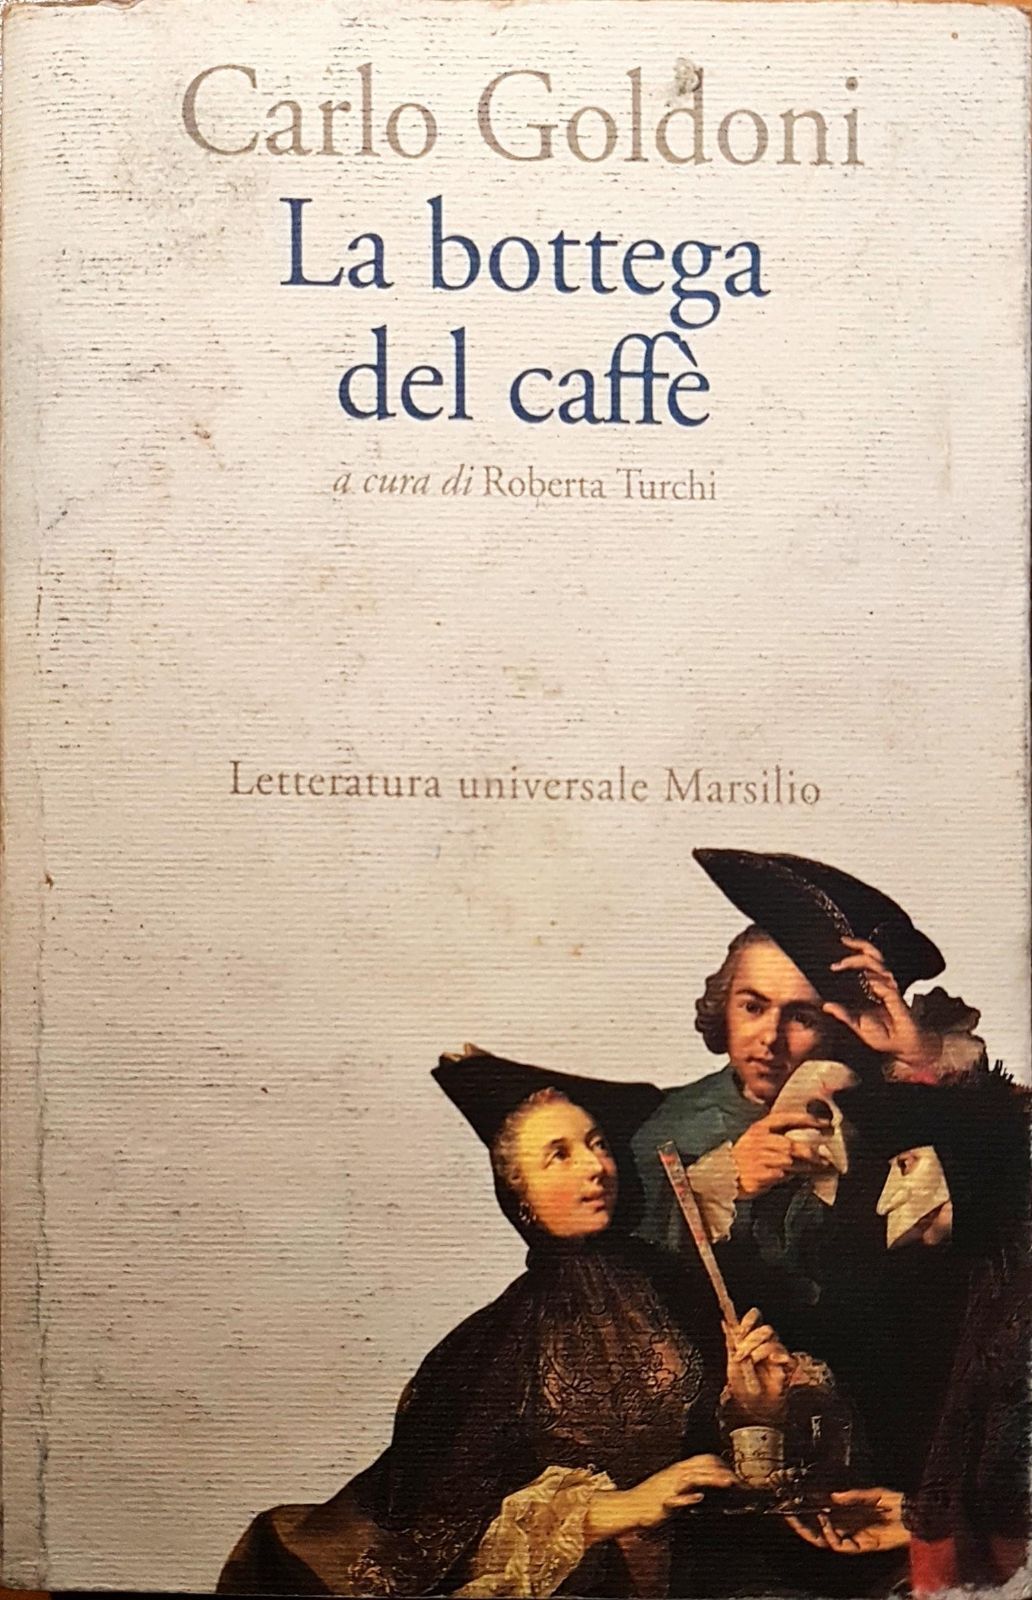 La bottega del caff? - Carlo Goldoni - Marsilio - 1999 -N